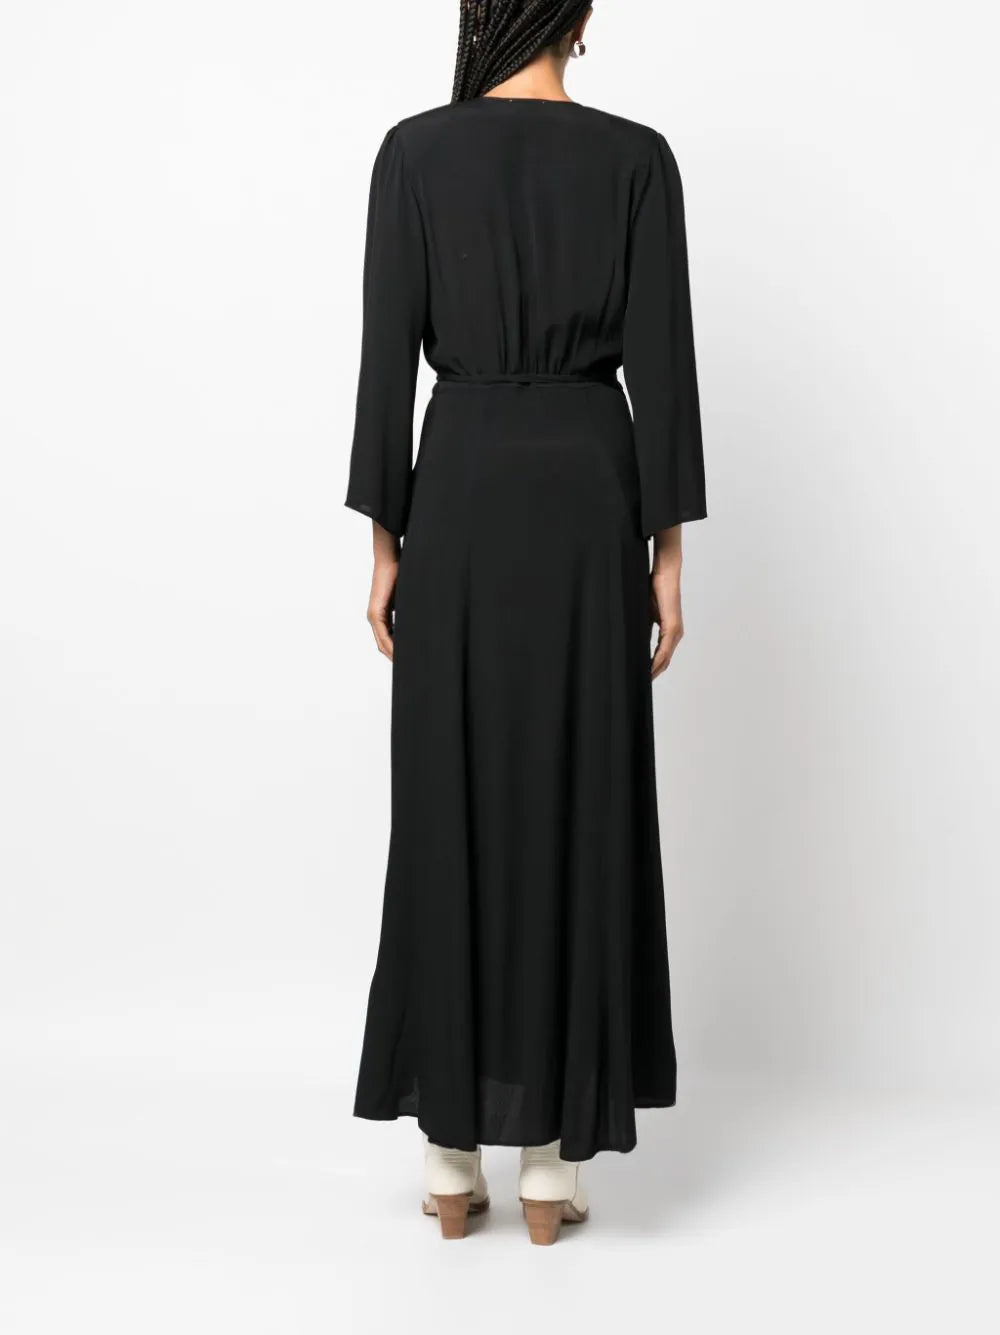 Marocain crepe crossover dress, black